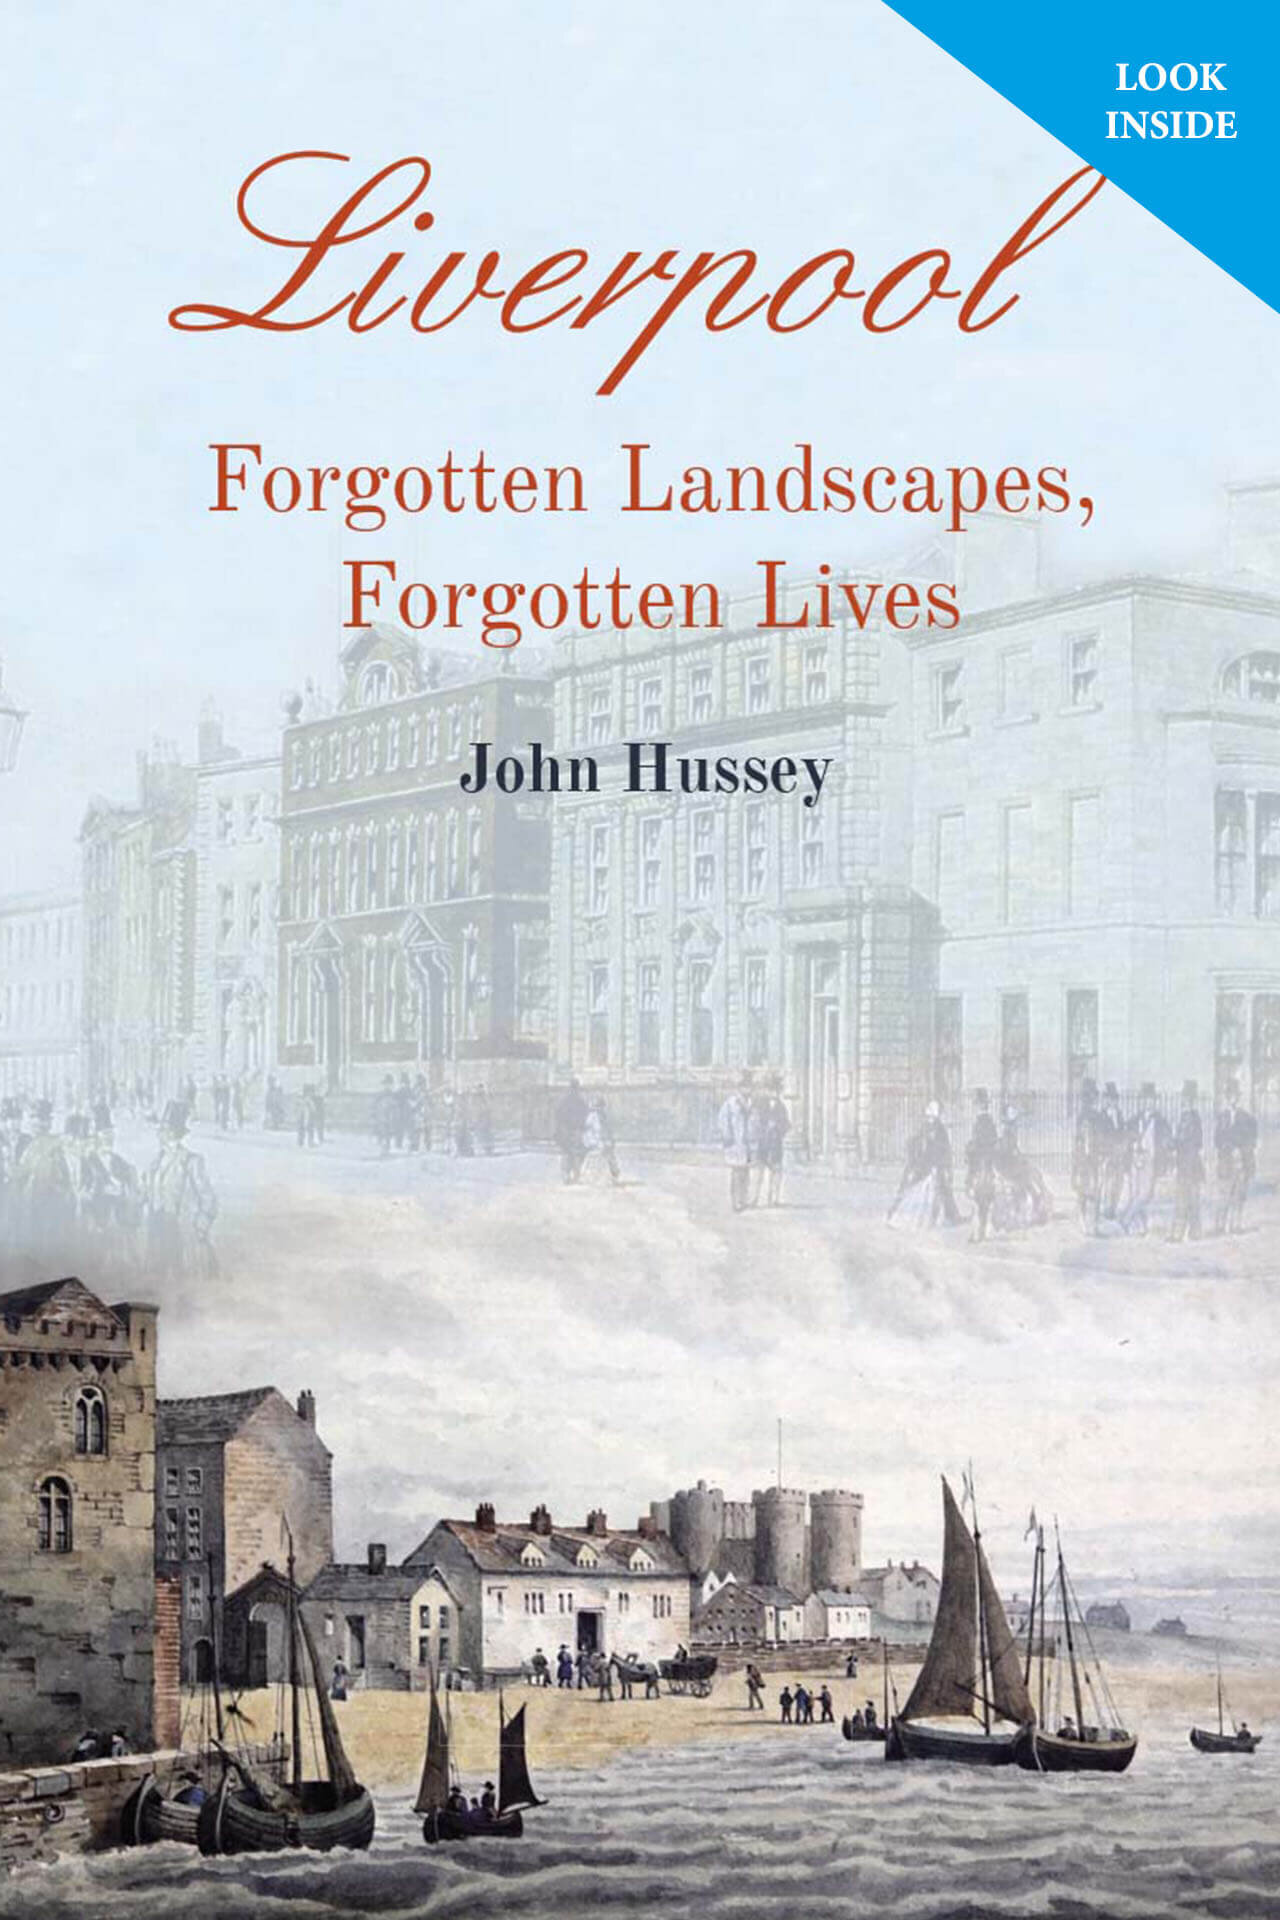 Liverpool Forgotten Landscapes, Forgotten Lives by John Hussey